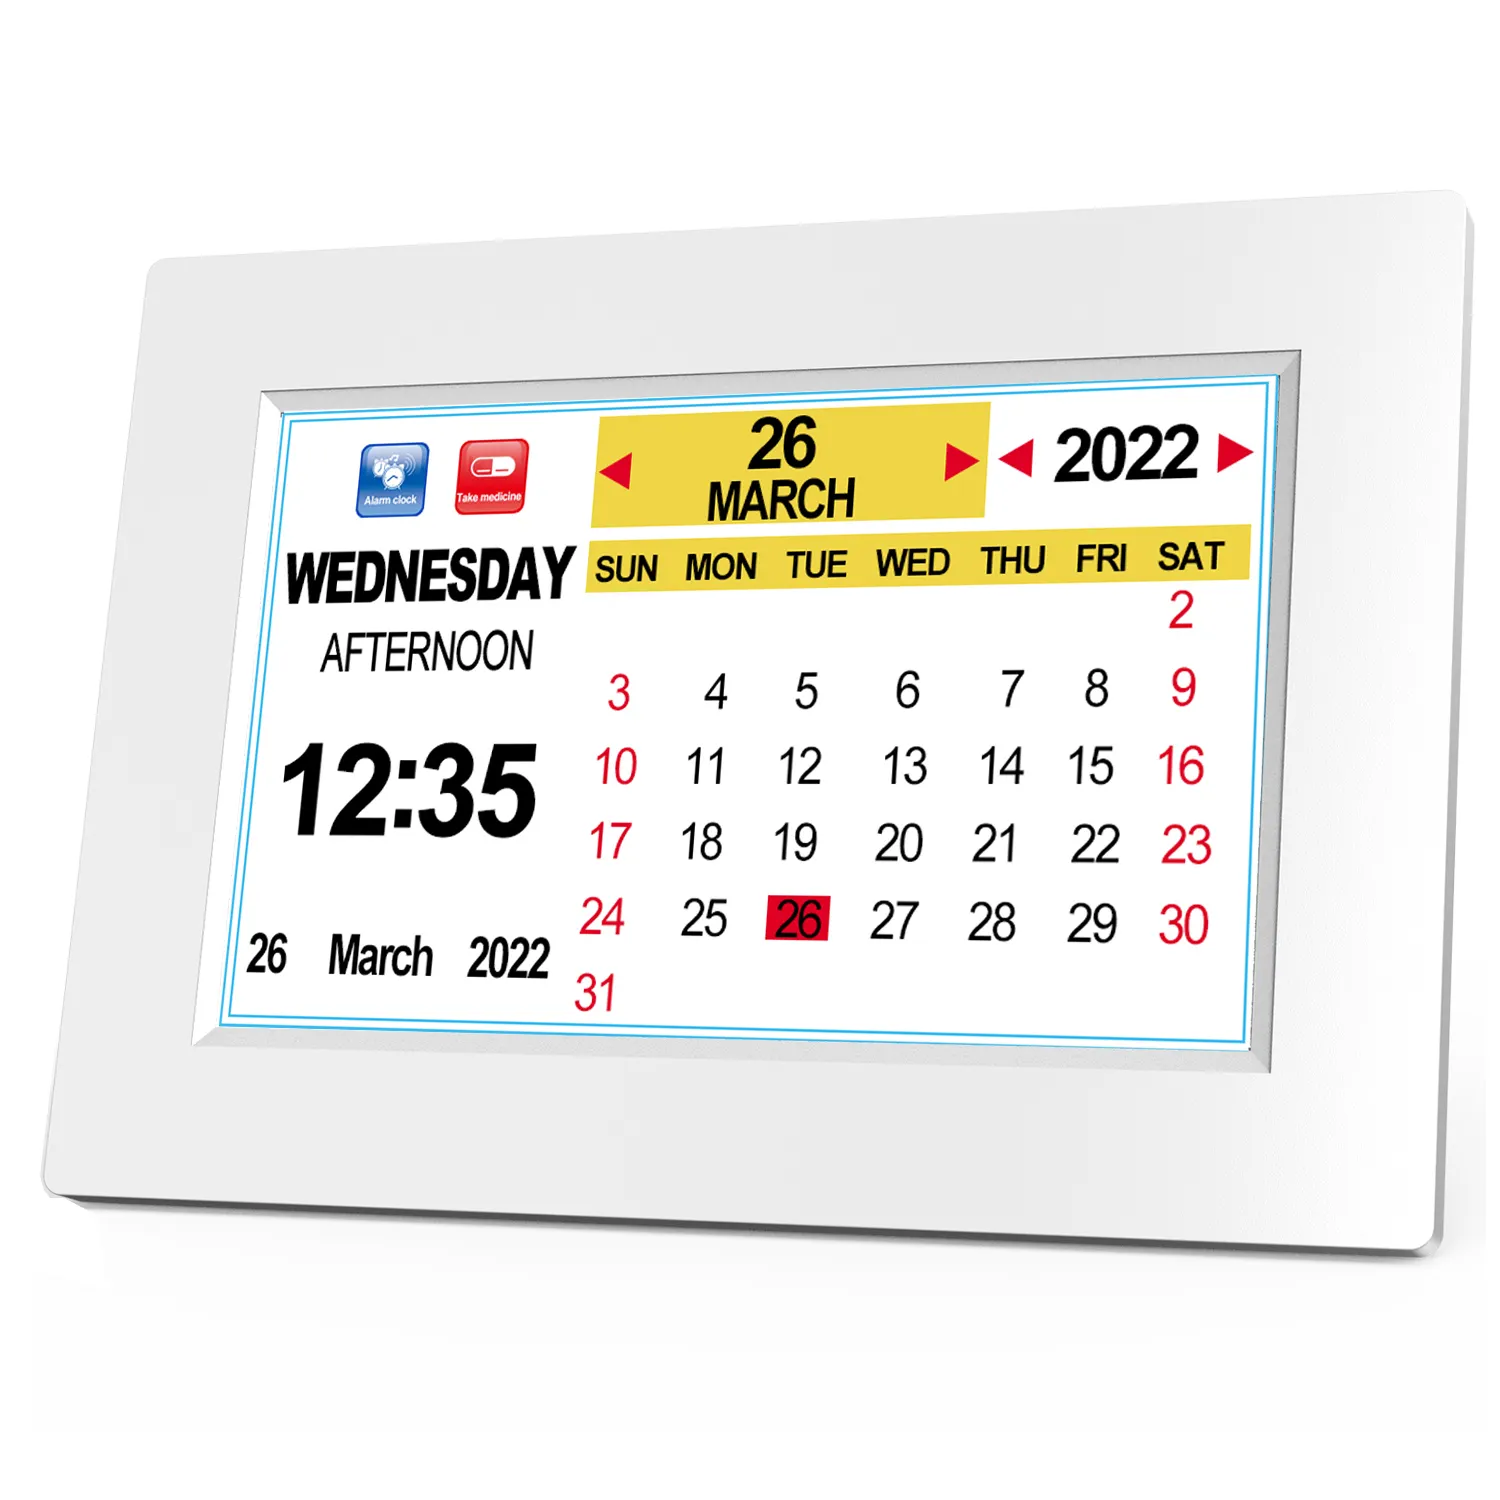 Calendario digital Reloj despertador de calendario digital de 8 "con fecha de día Mes Año, reloj de escritorio para personas mayores, demencia, Alzheimer